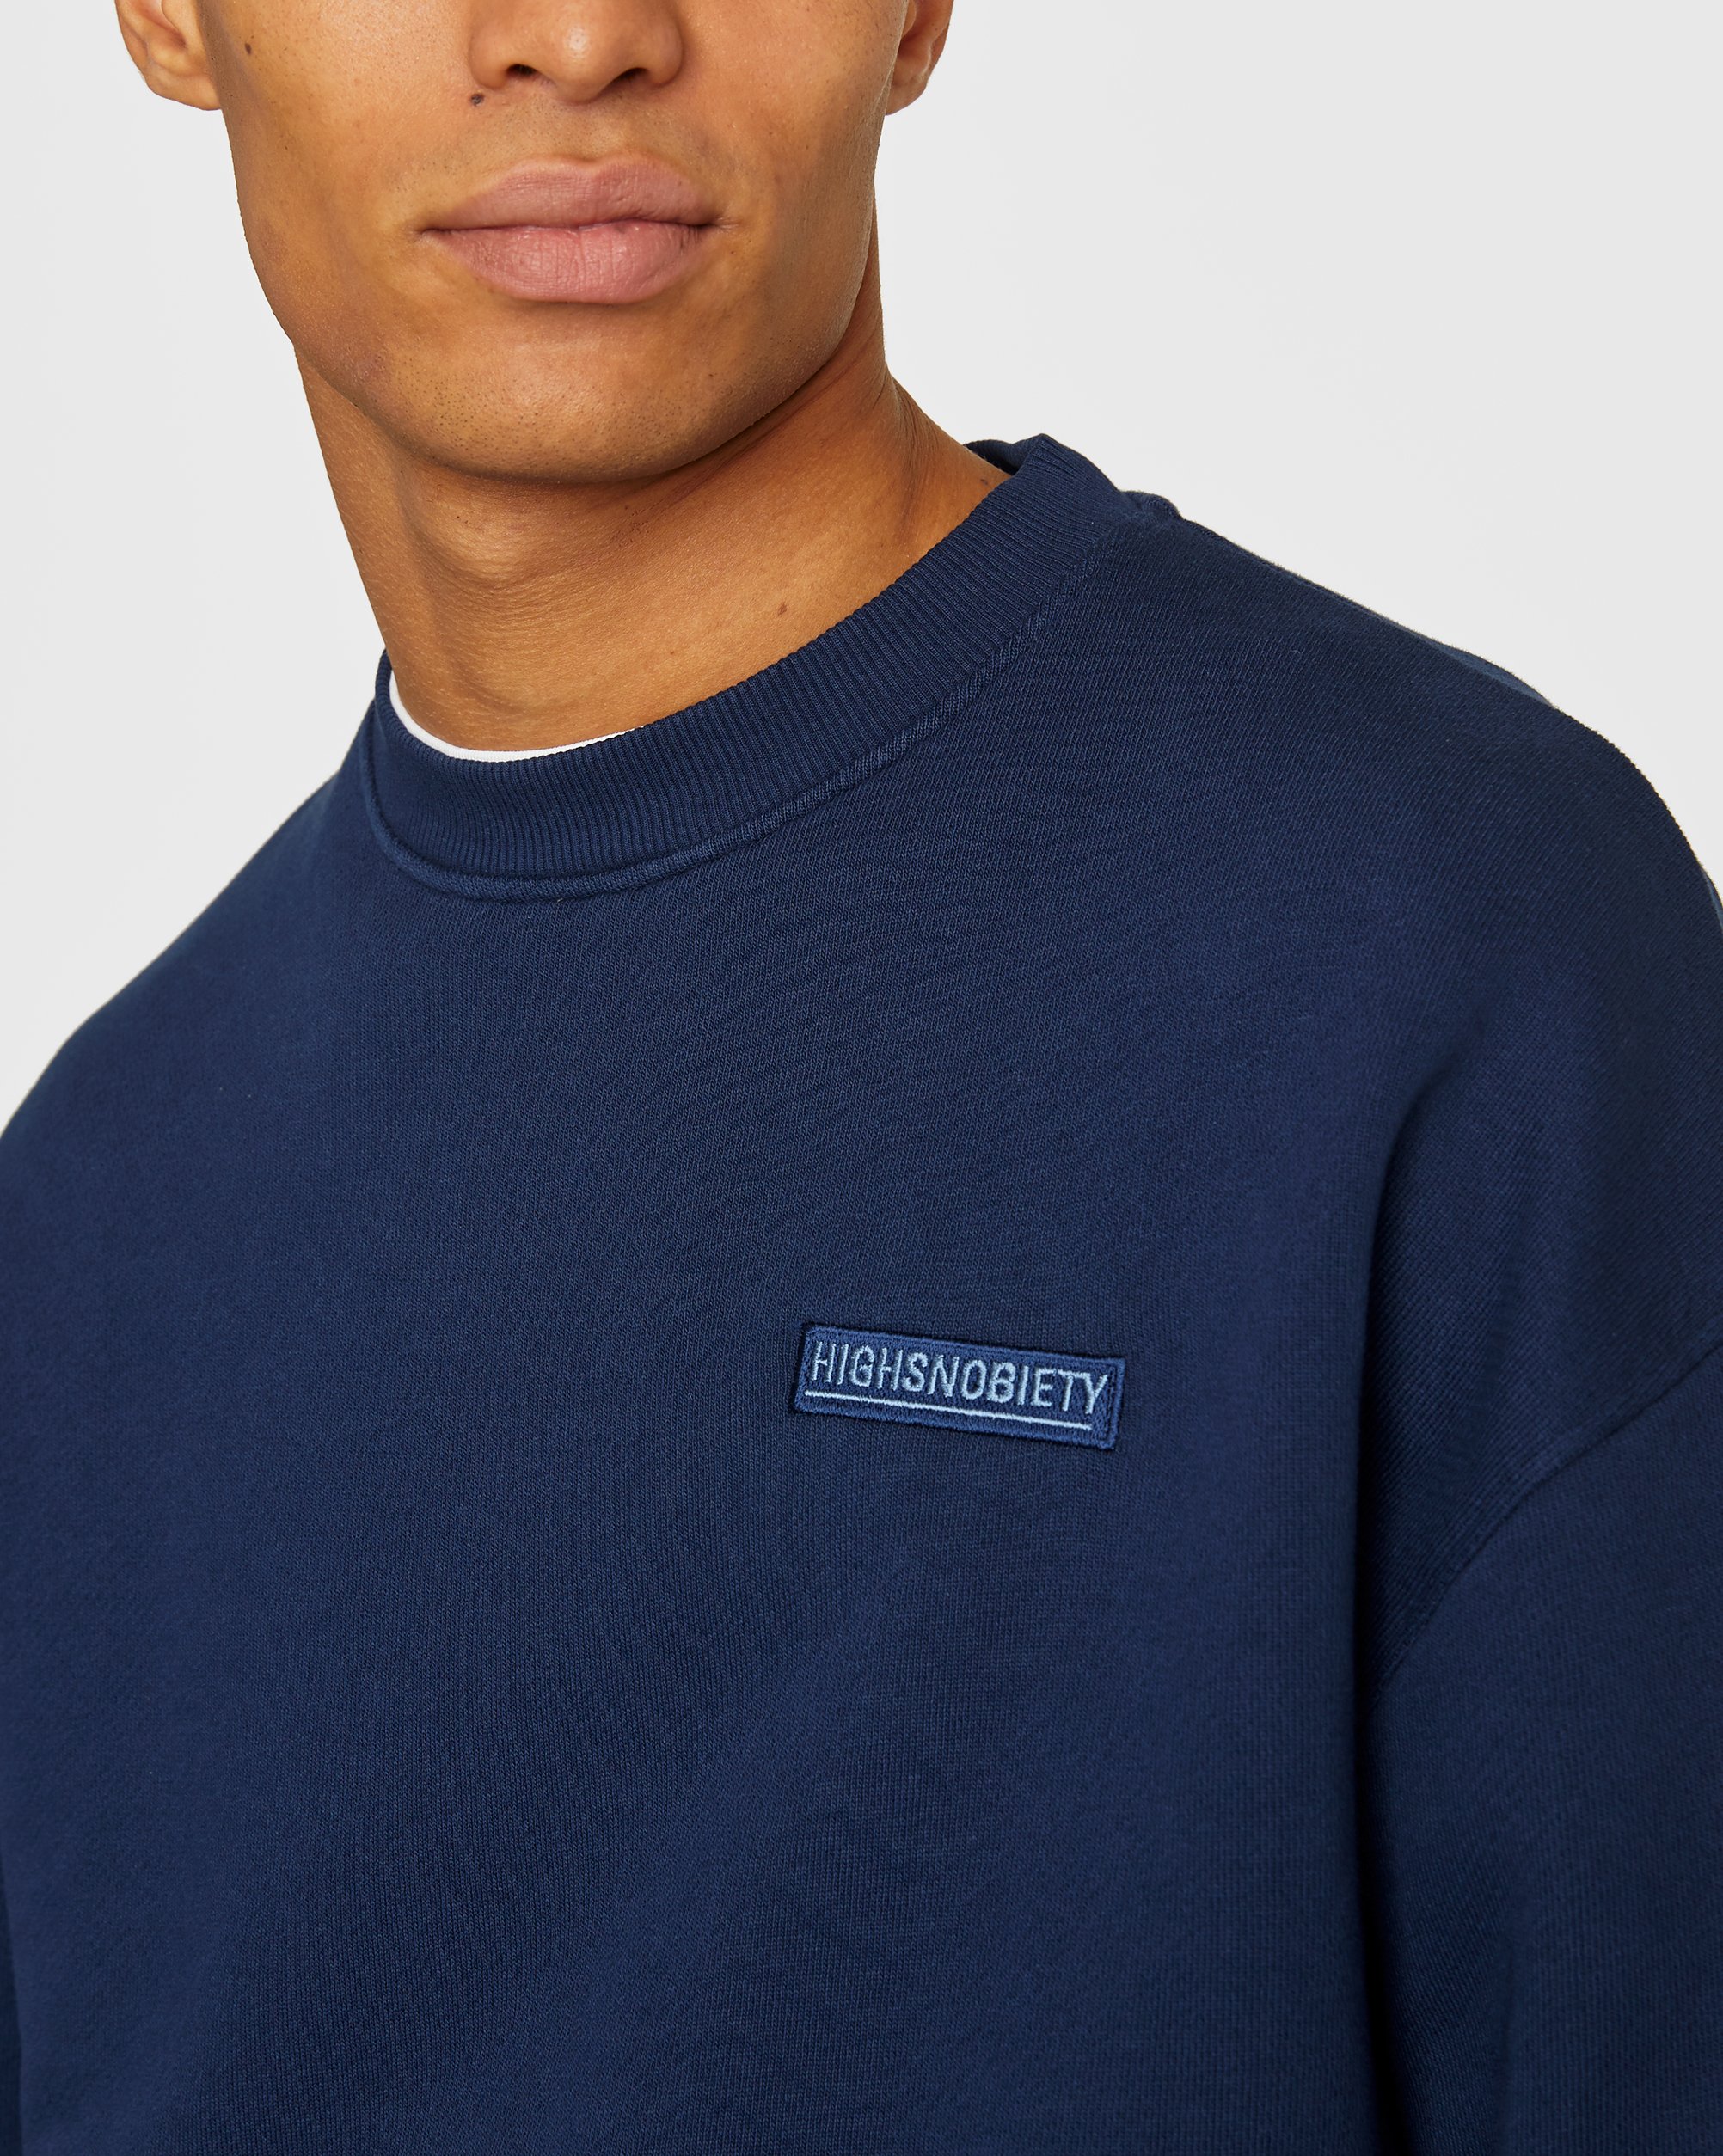 Highsnobiety - Staples Sweatshirt Navy - Clothing - Blue - Image 5